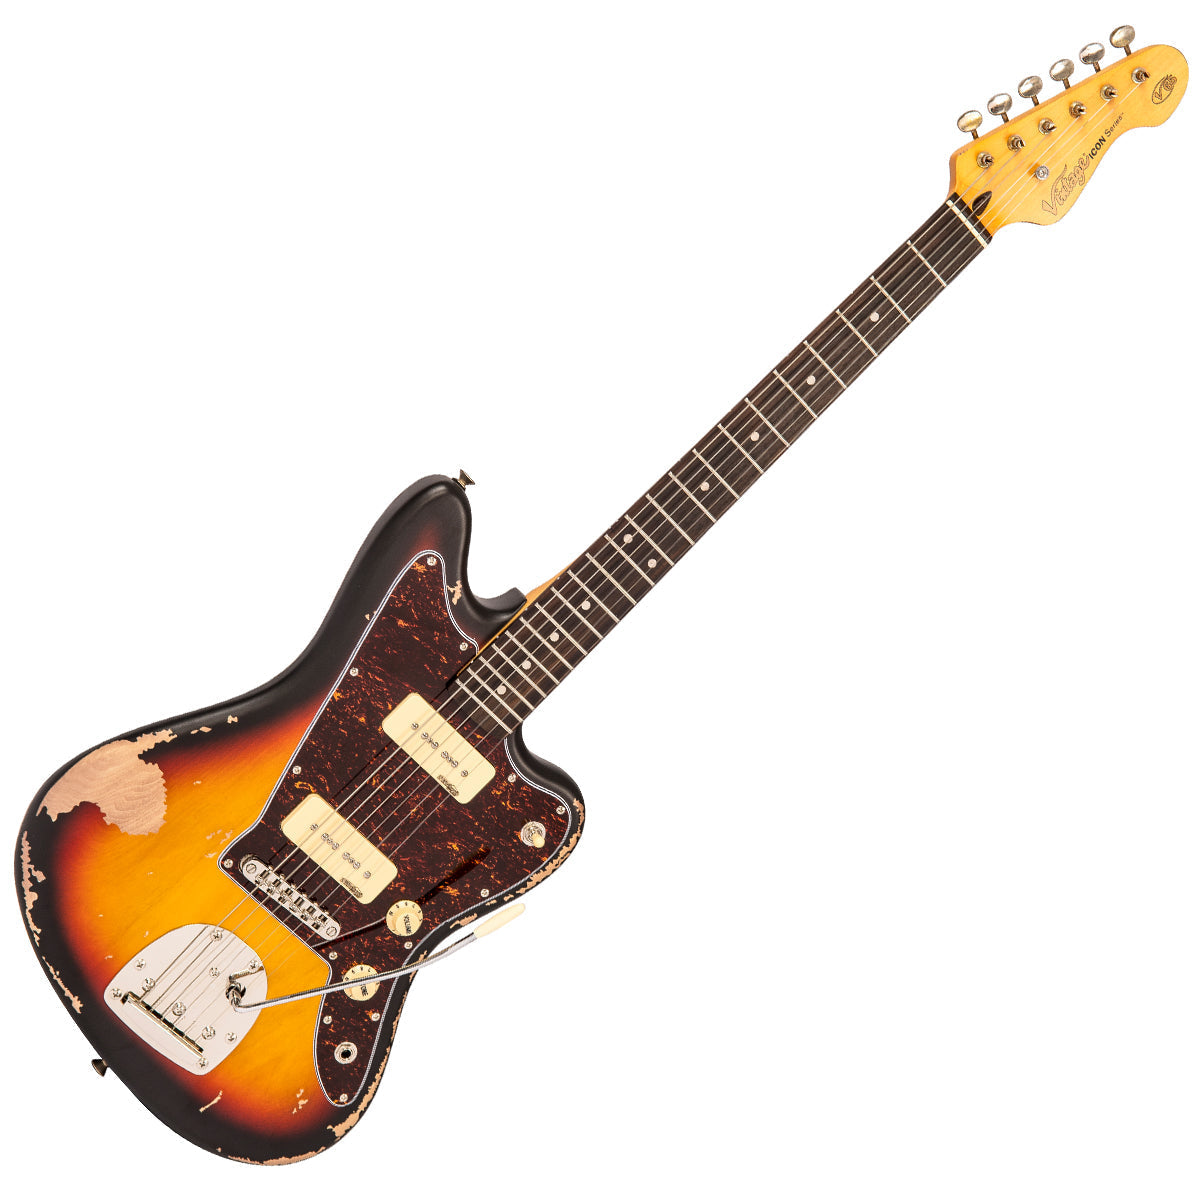 Vintage V65 ICON Vibrato Electric Guitar ~ Distressed Tobacco Sunburst, Electric Guitar for sale at Richards Guitars.